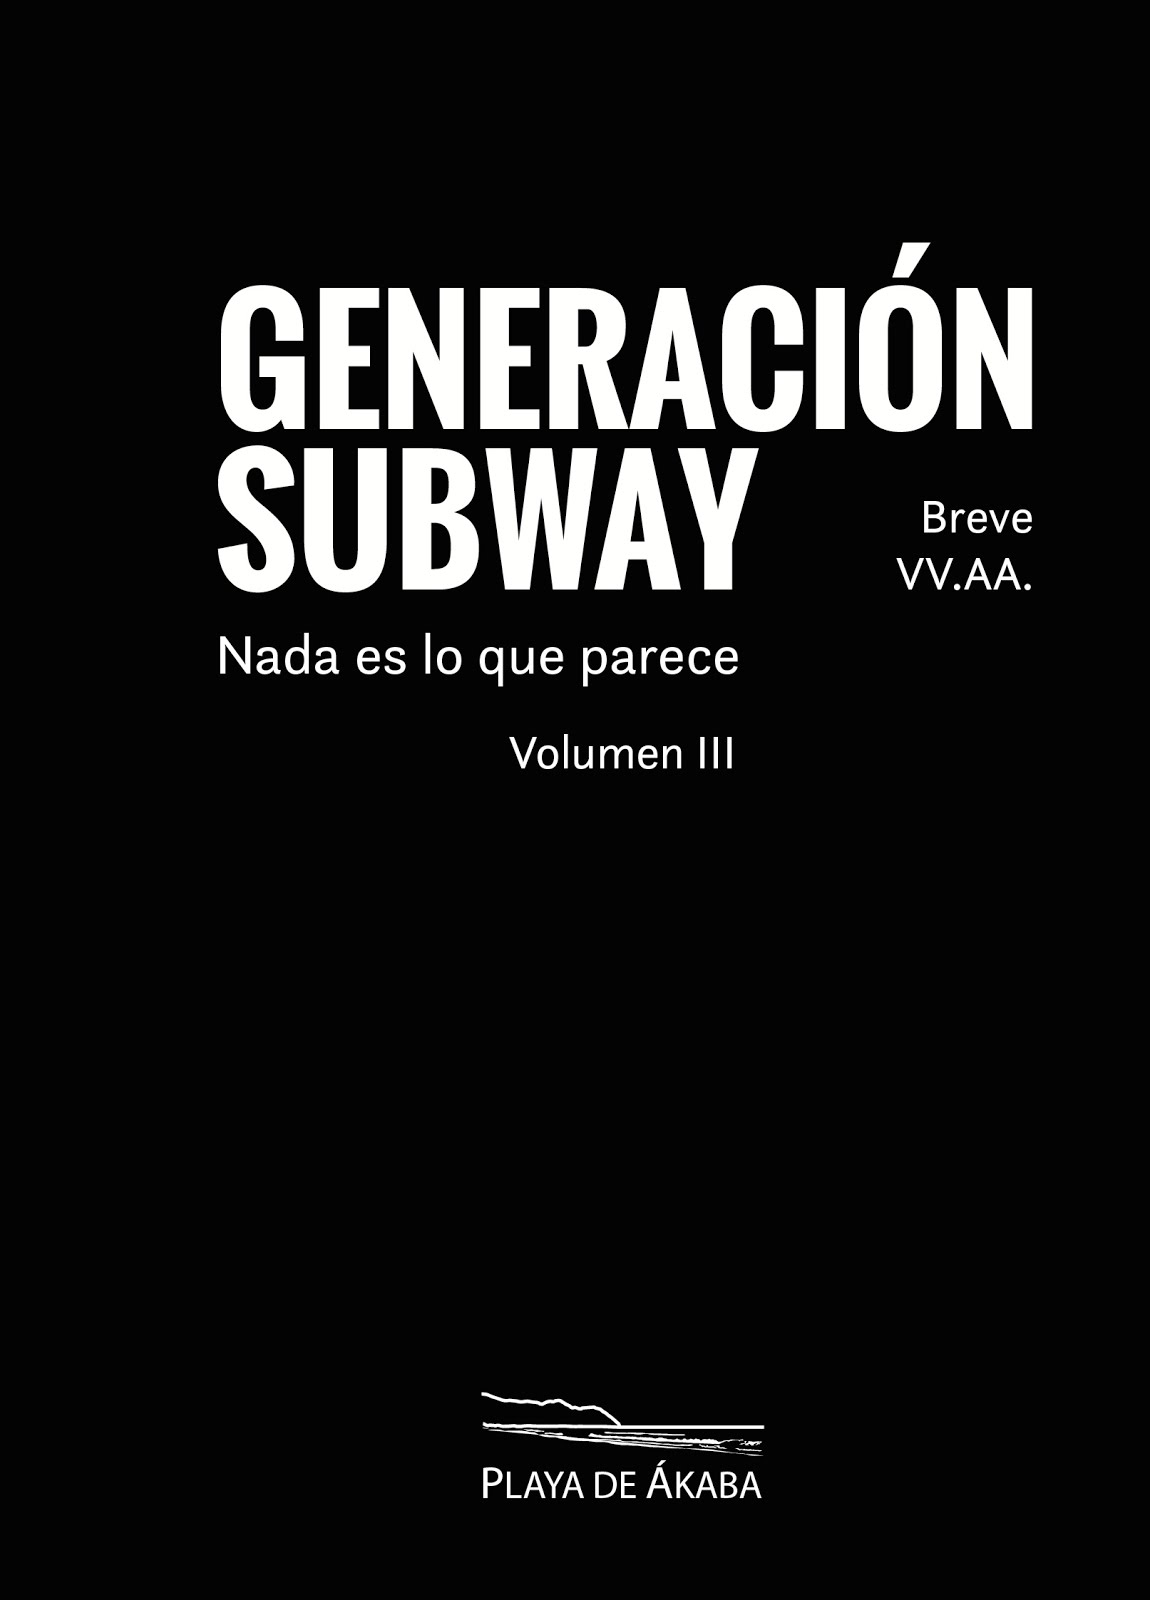 AA.VV. - "Generación Subway III. Breve"